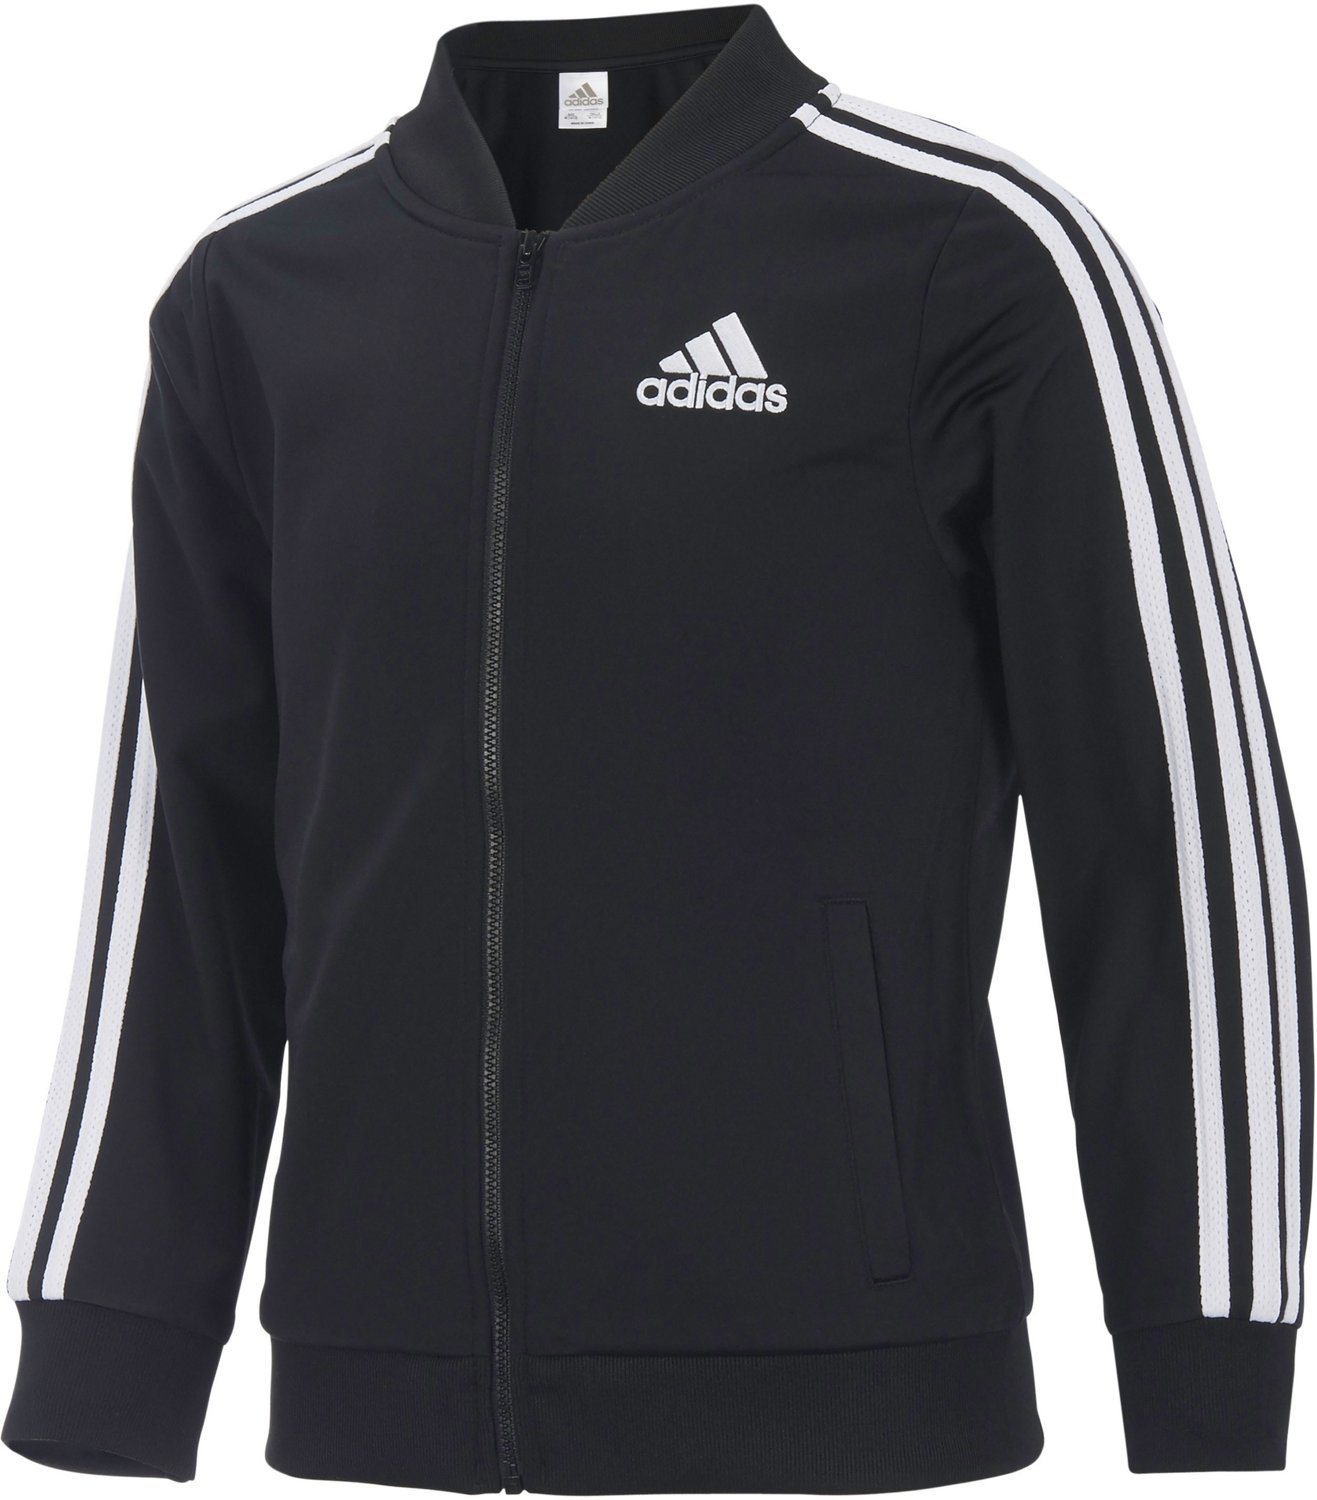 academy adidas jacket